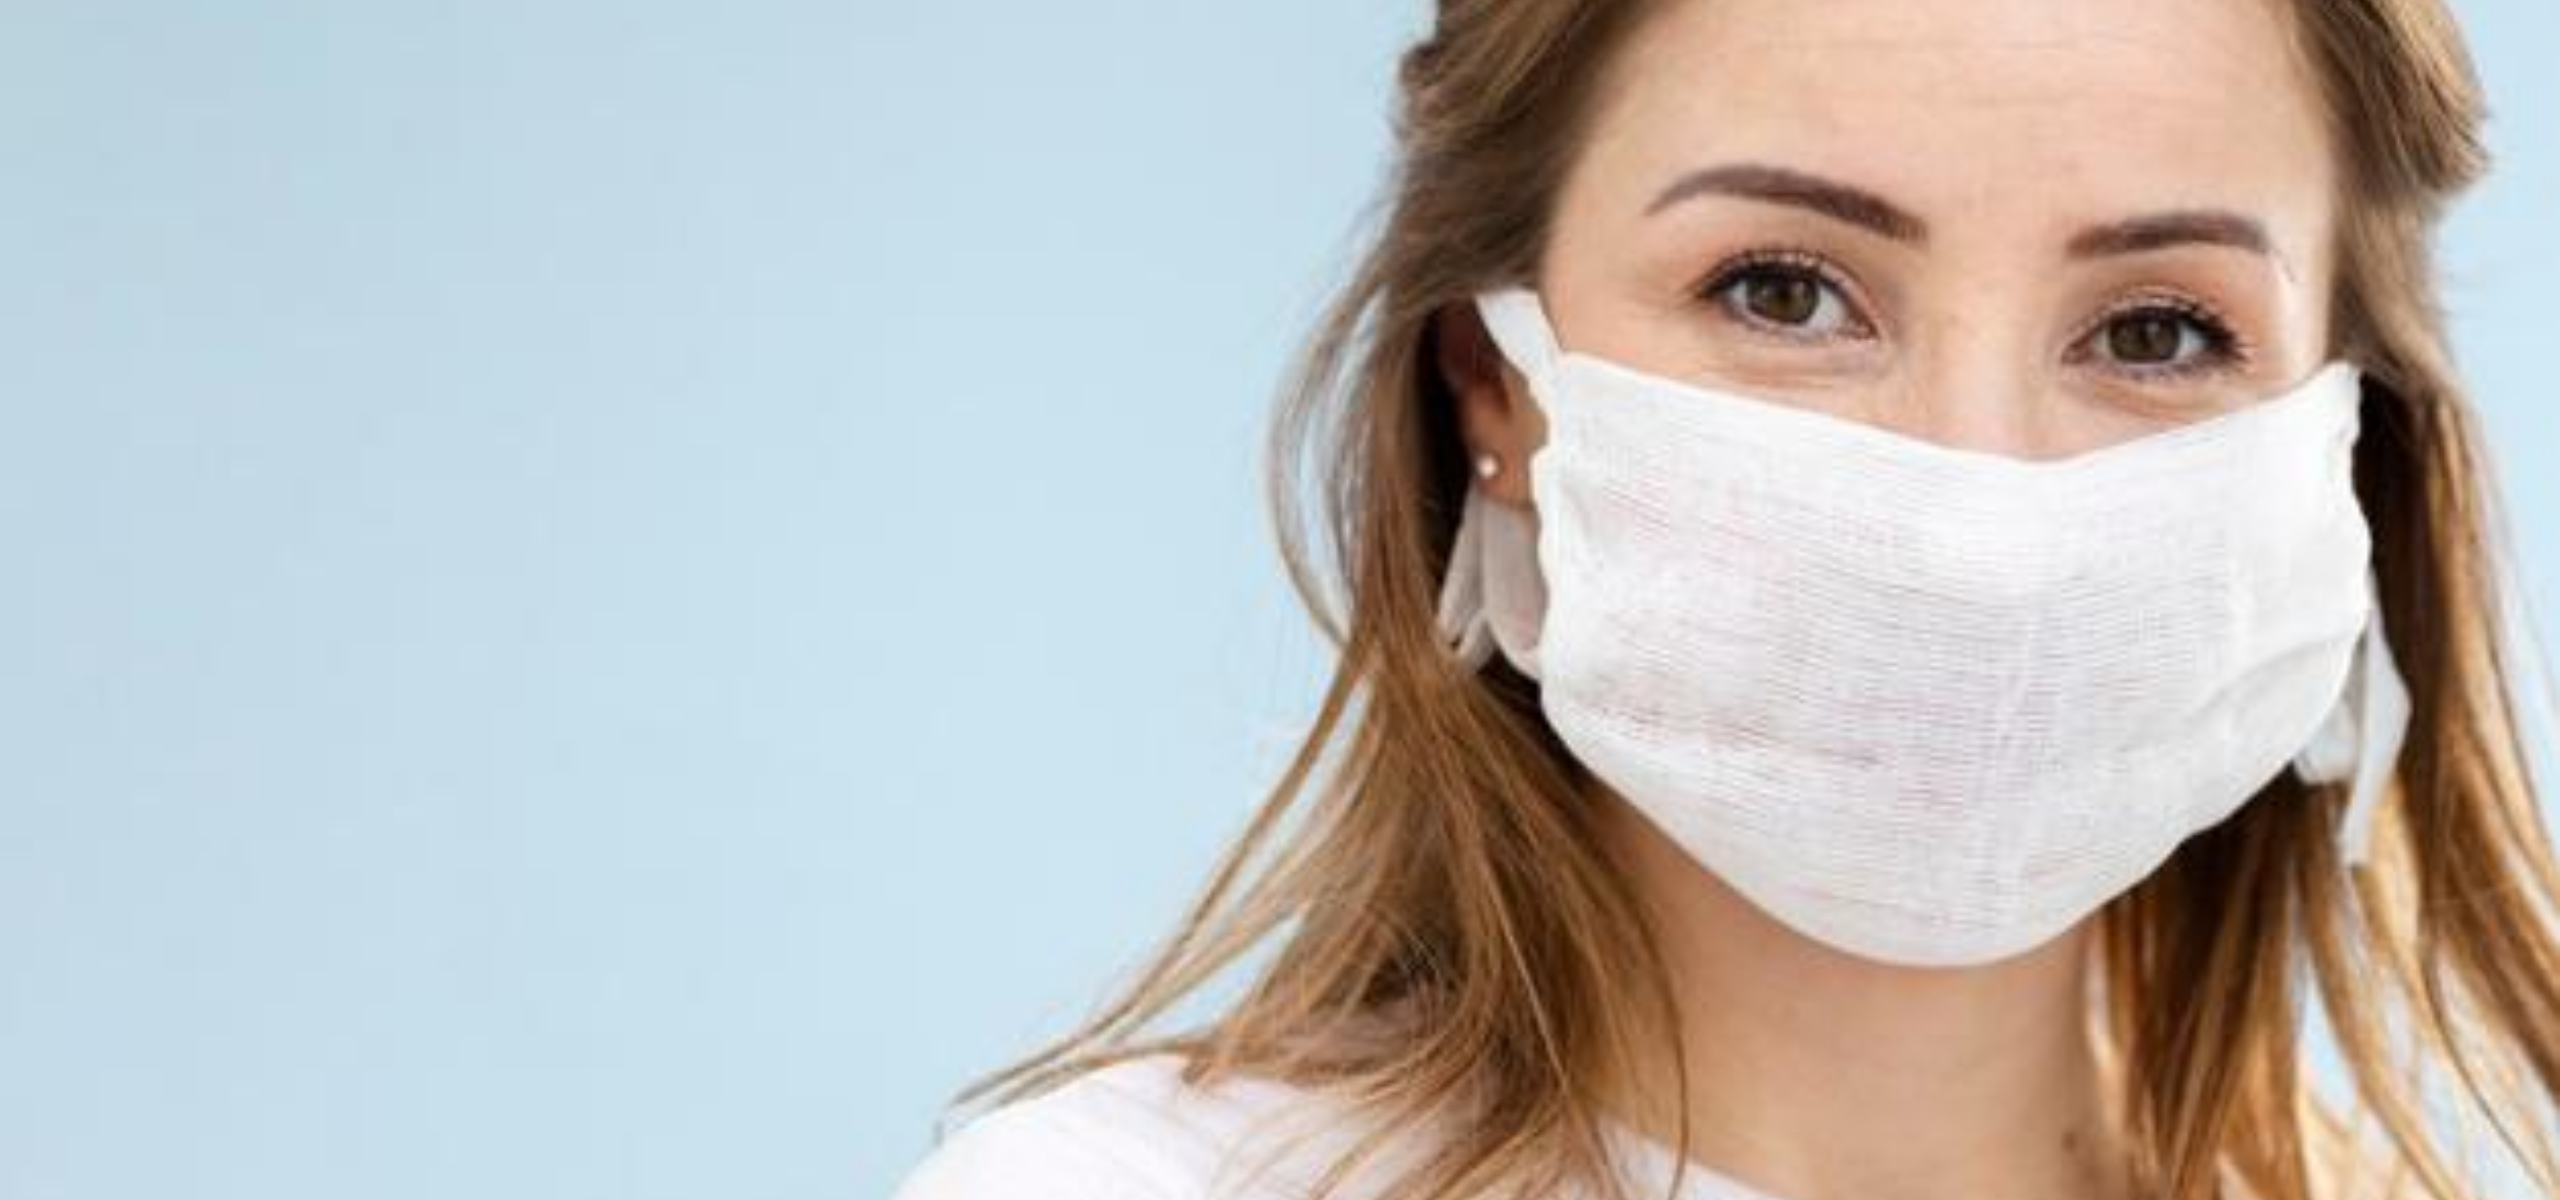 A máscara de US$ 1 milhão que pode acabar com a pandemia